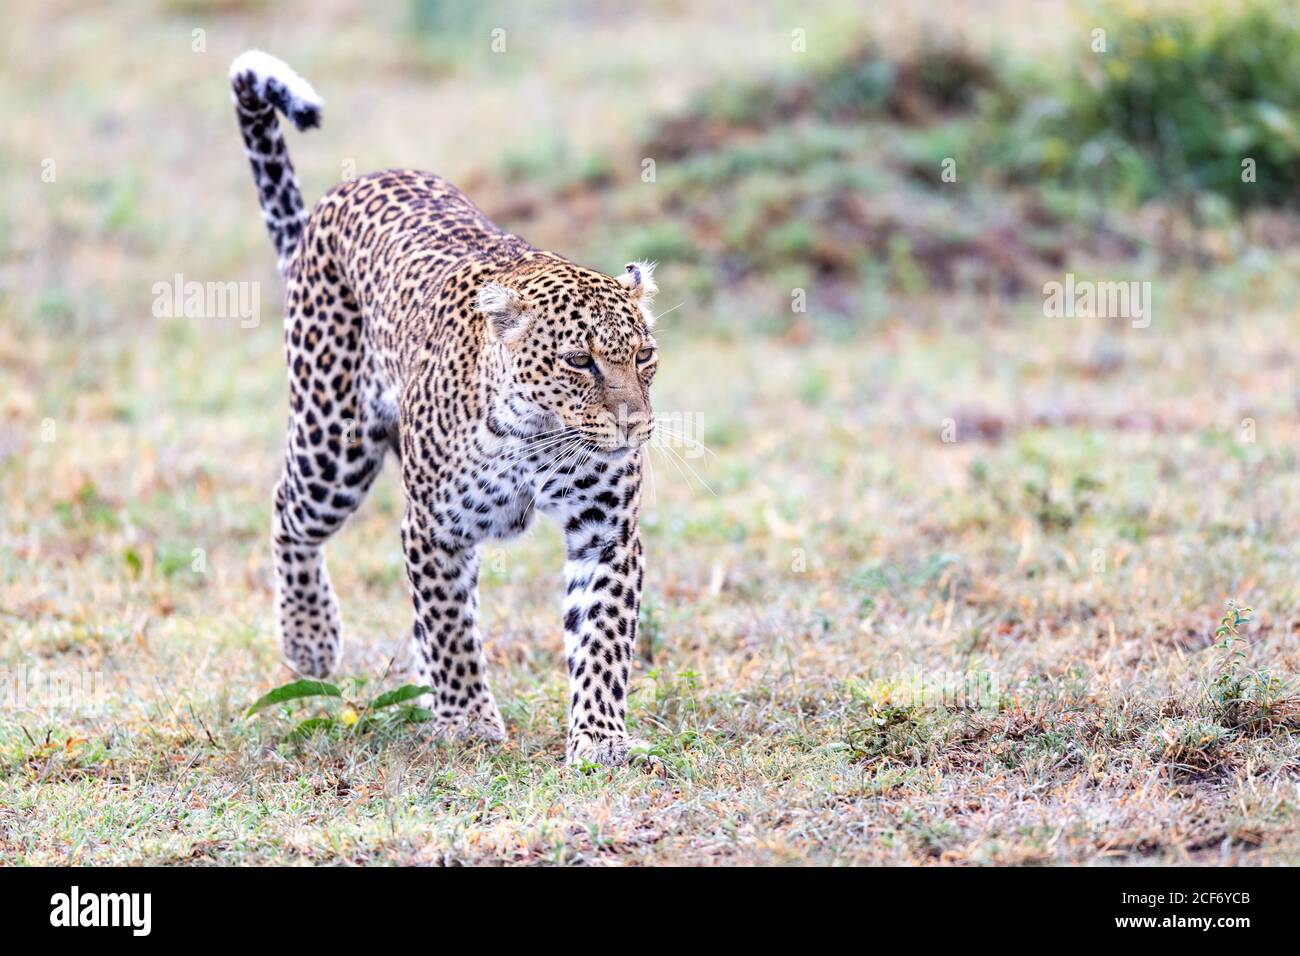 African leopard (Panthera pardus) in Kenya, Africa Stock Photo